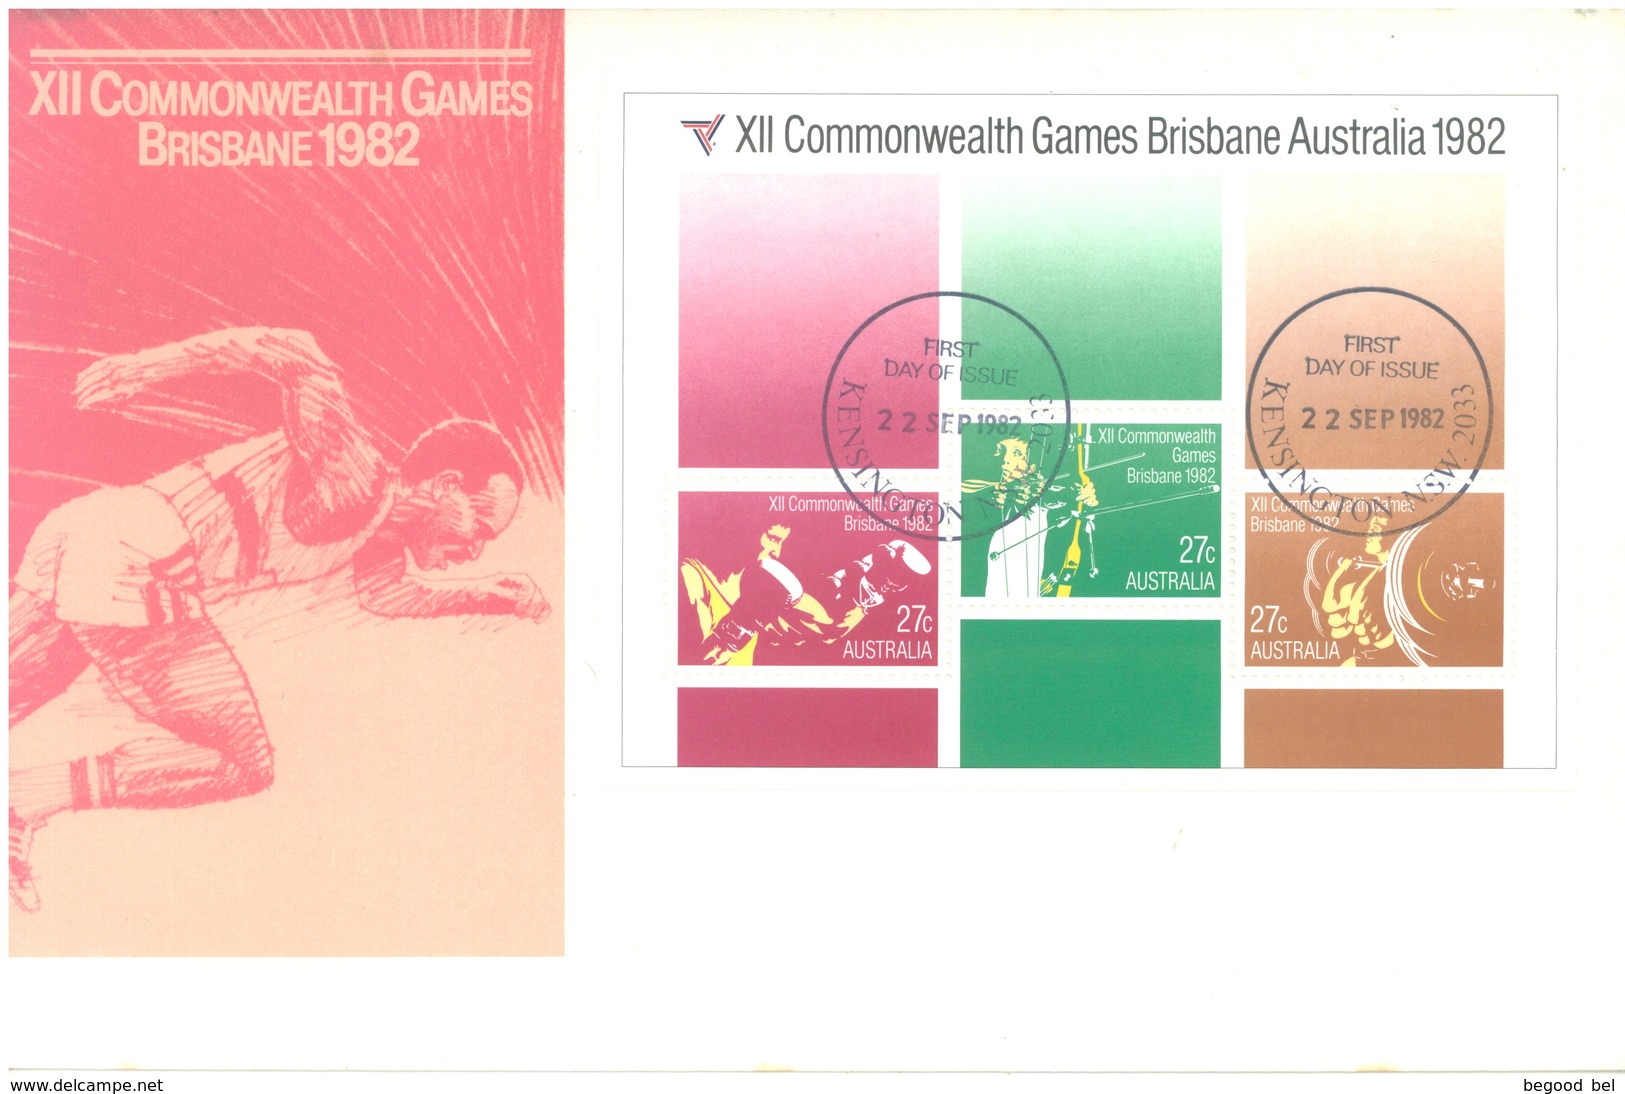 AUSTRALIA  - FDC - 22.9.1982 - COMMONWEALTH BRISBANE GAMES  - Yv 789-792 - Lot 18680 - Premiers Jours (FDC)